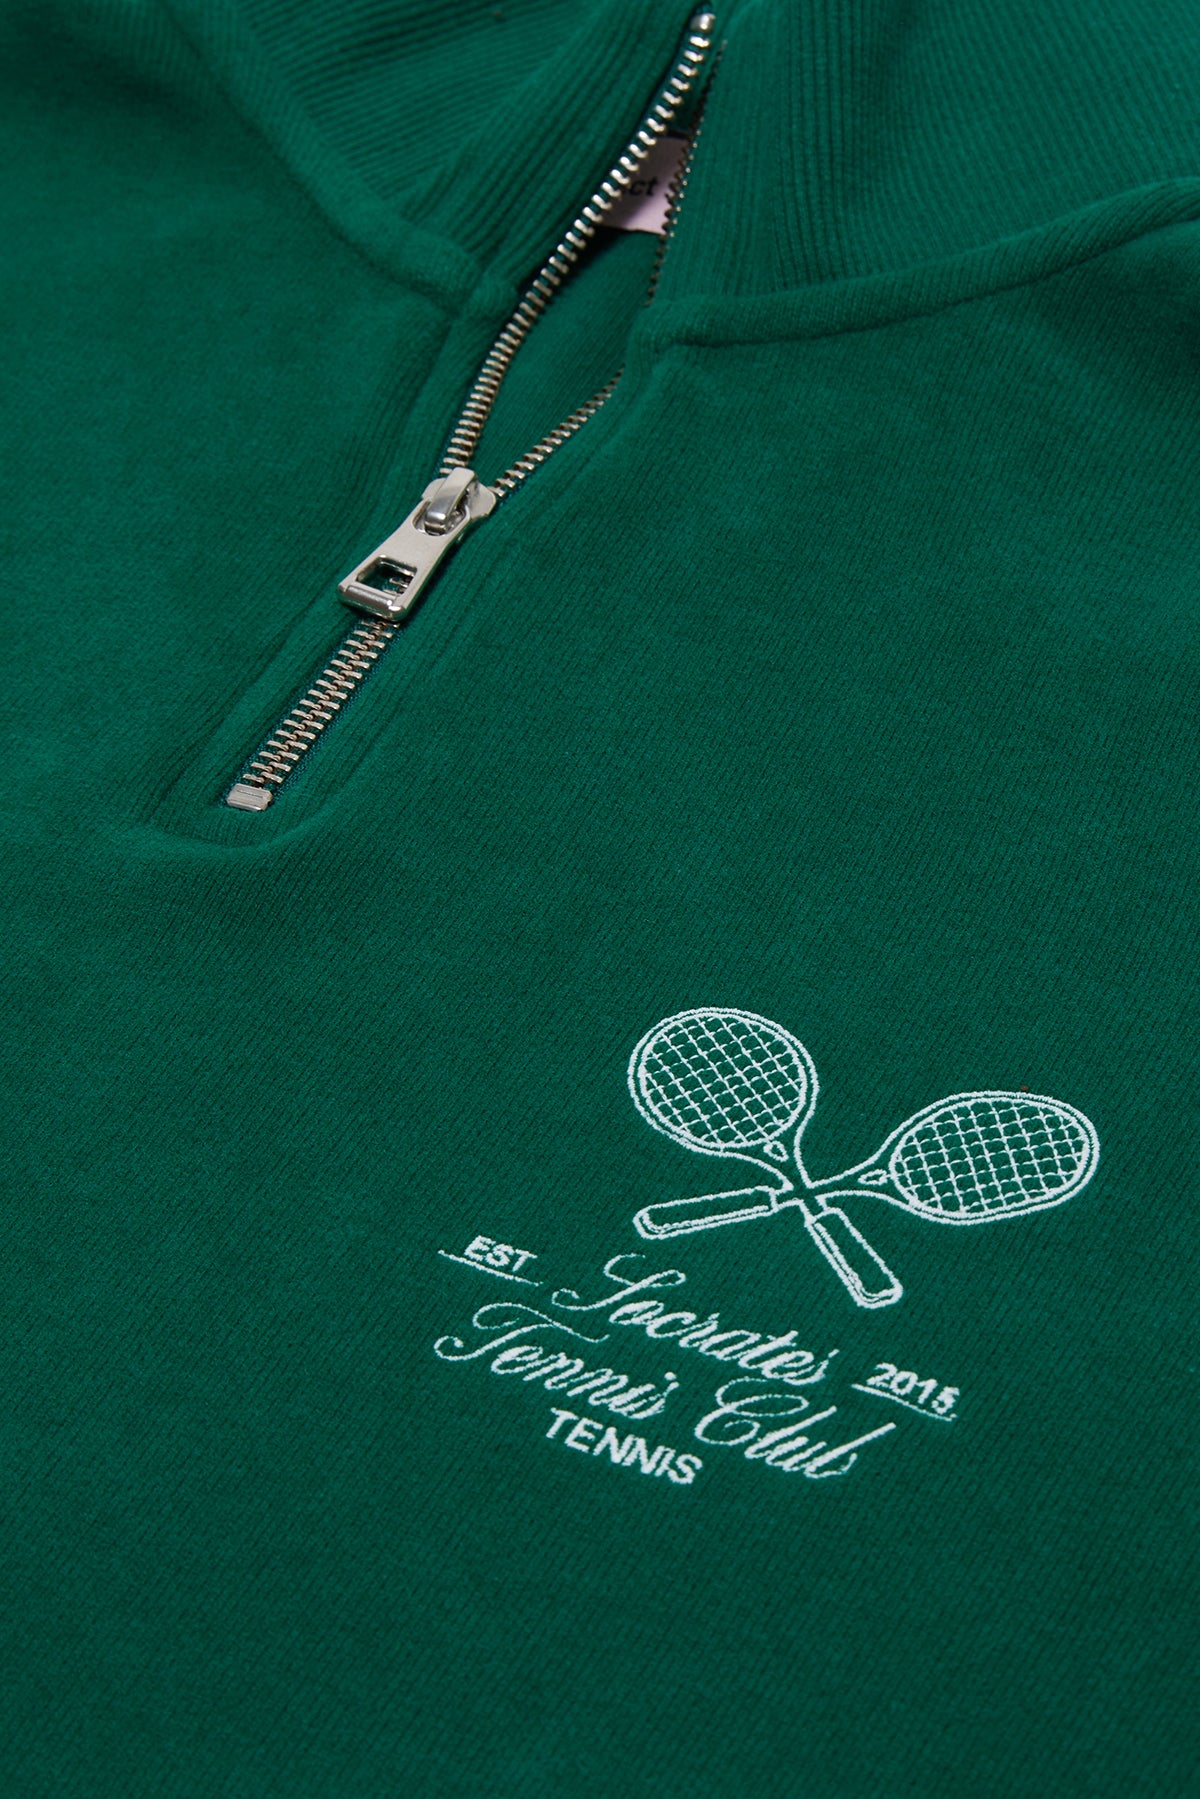 Socrates Tennis Club Super Soft Çeyrek Fermuarlı Sweatshirt - Nefti Yeşil